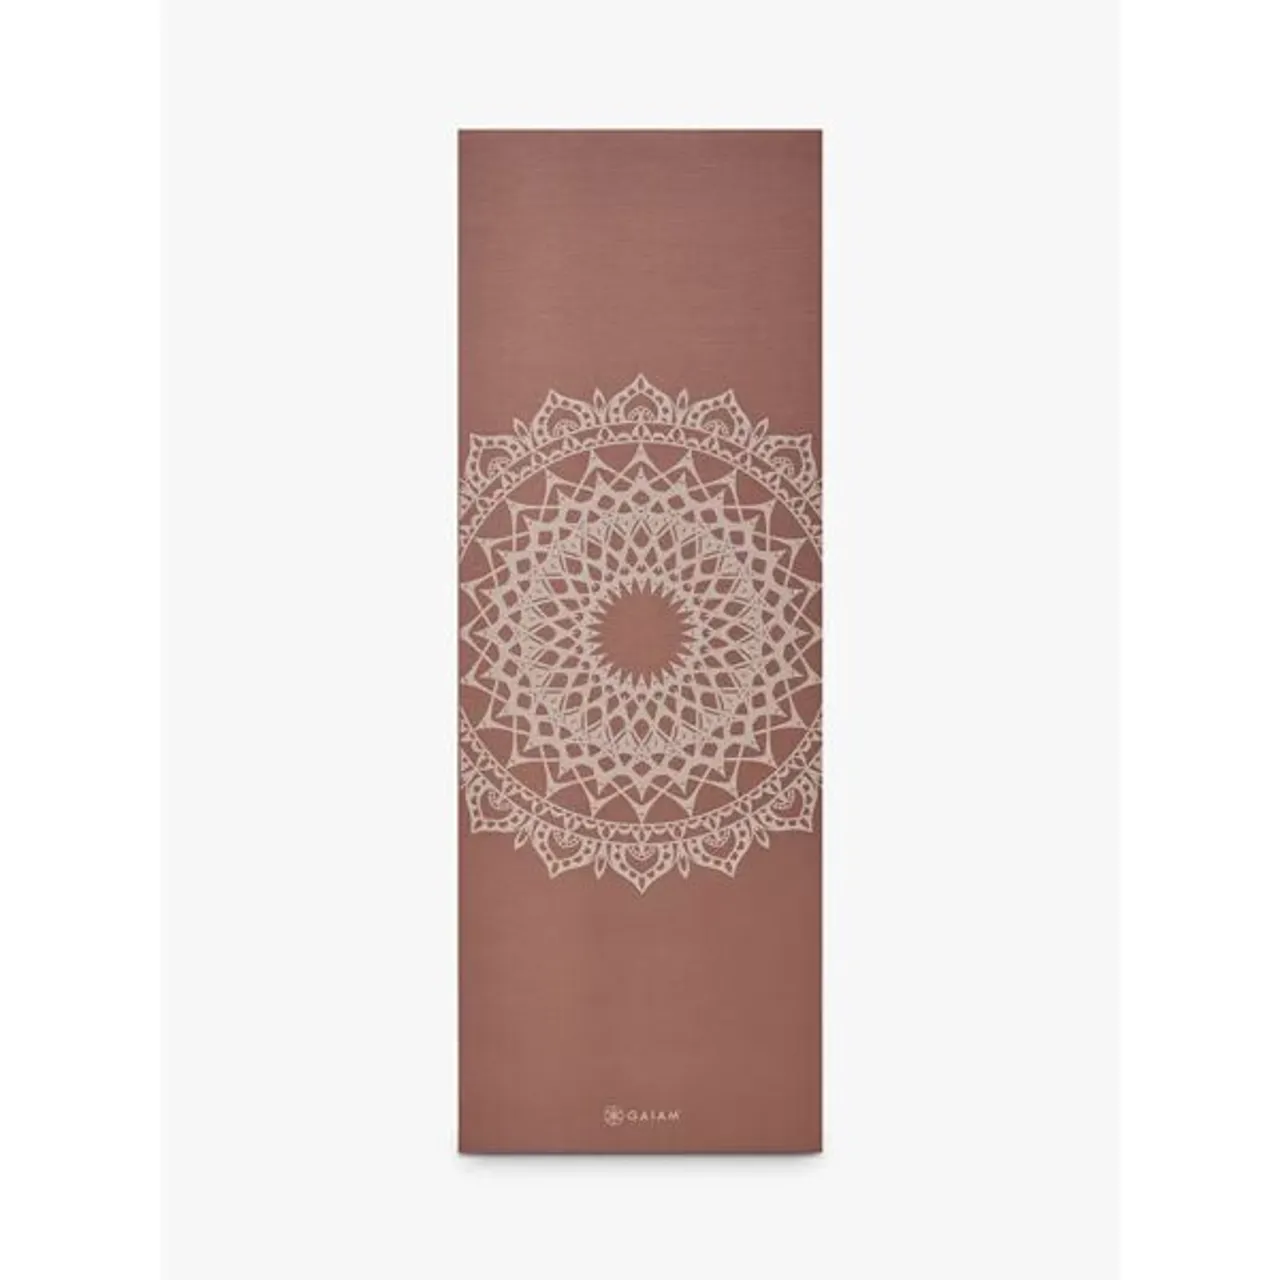 Gaiam Marra Yoga Mat, Cinnamon - Cinnamon - Unisex